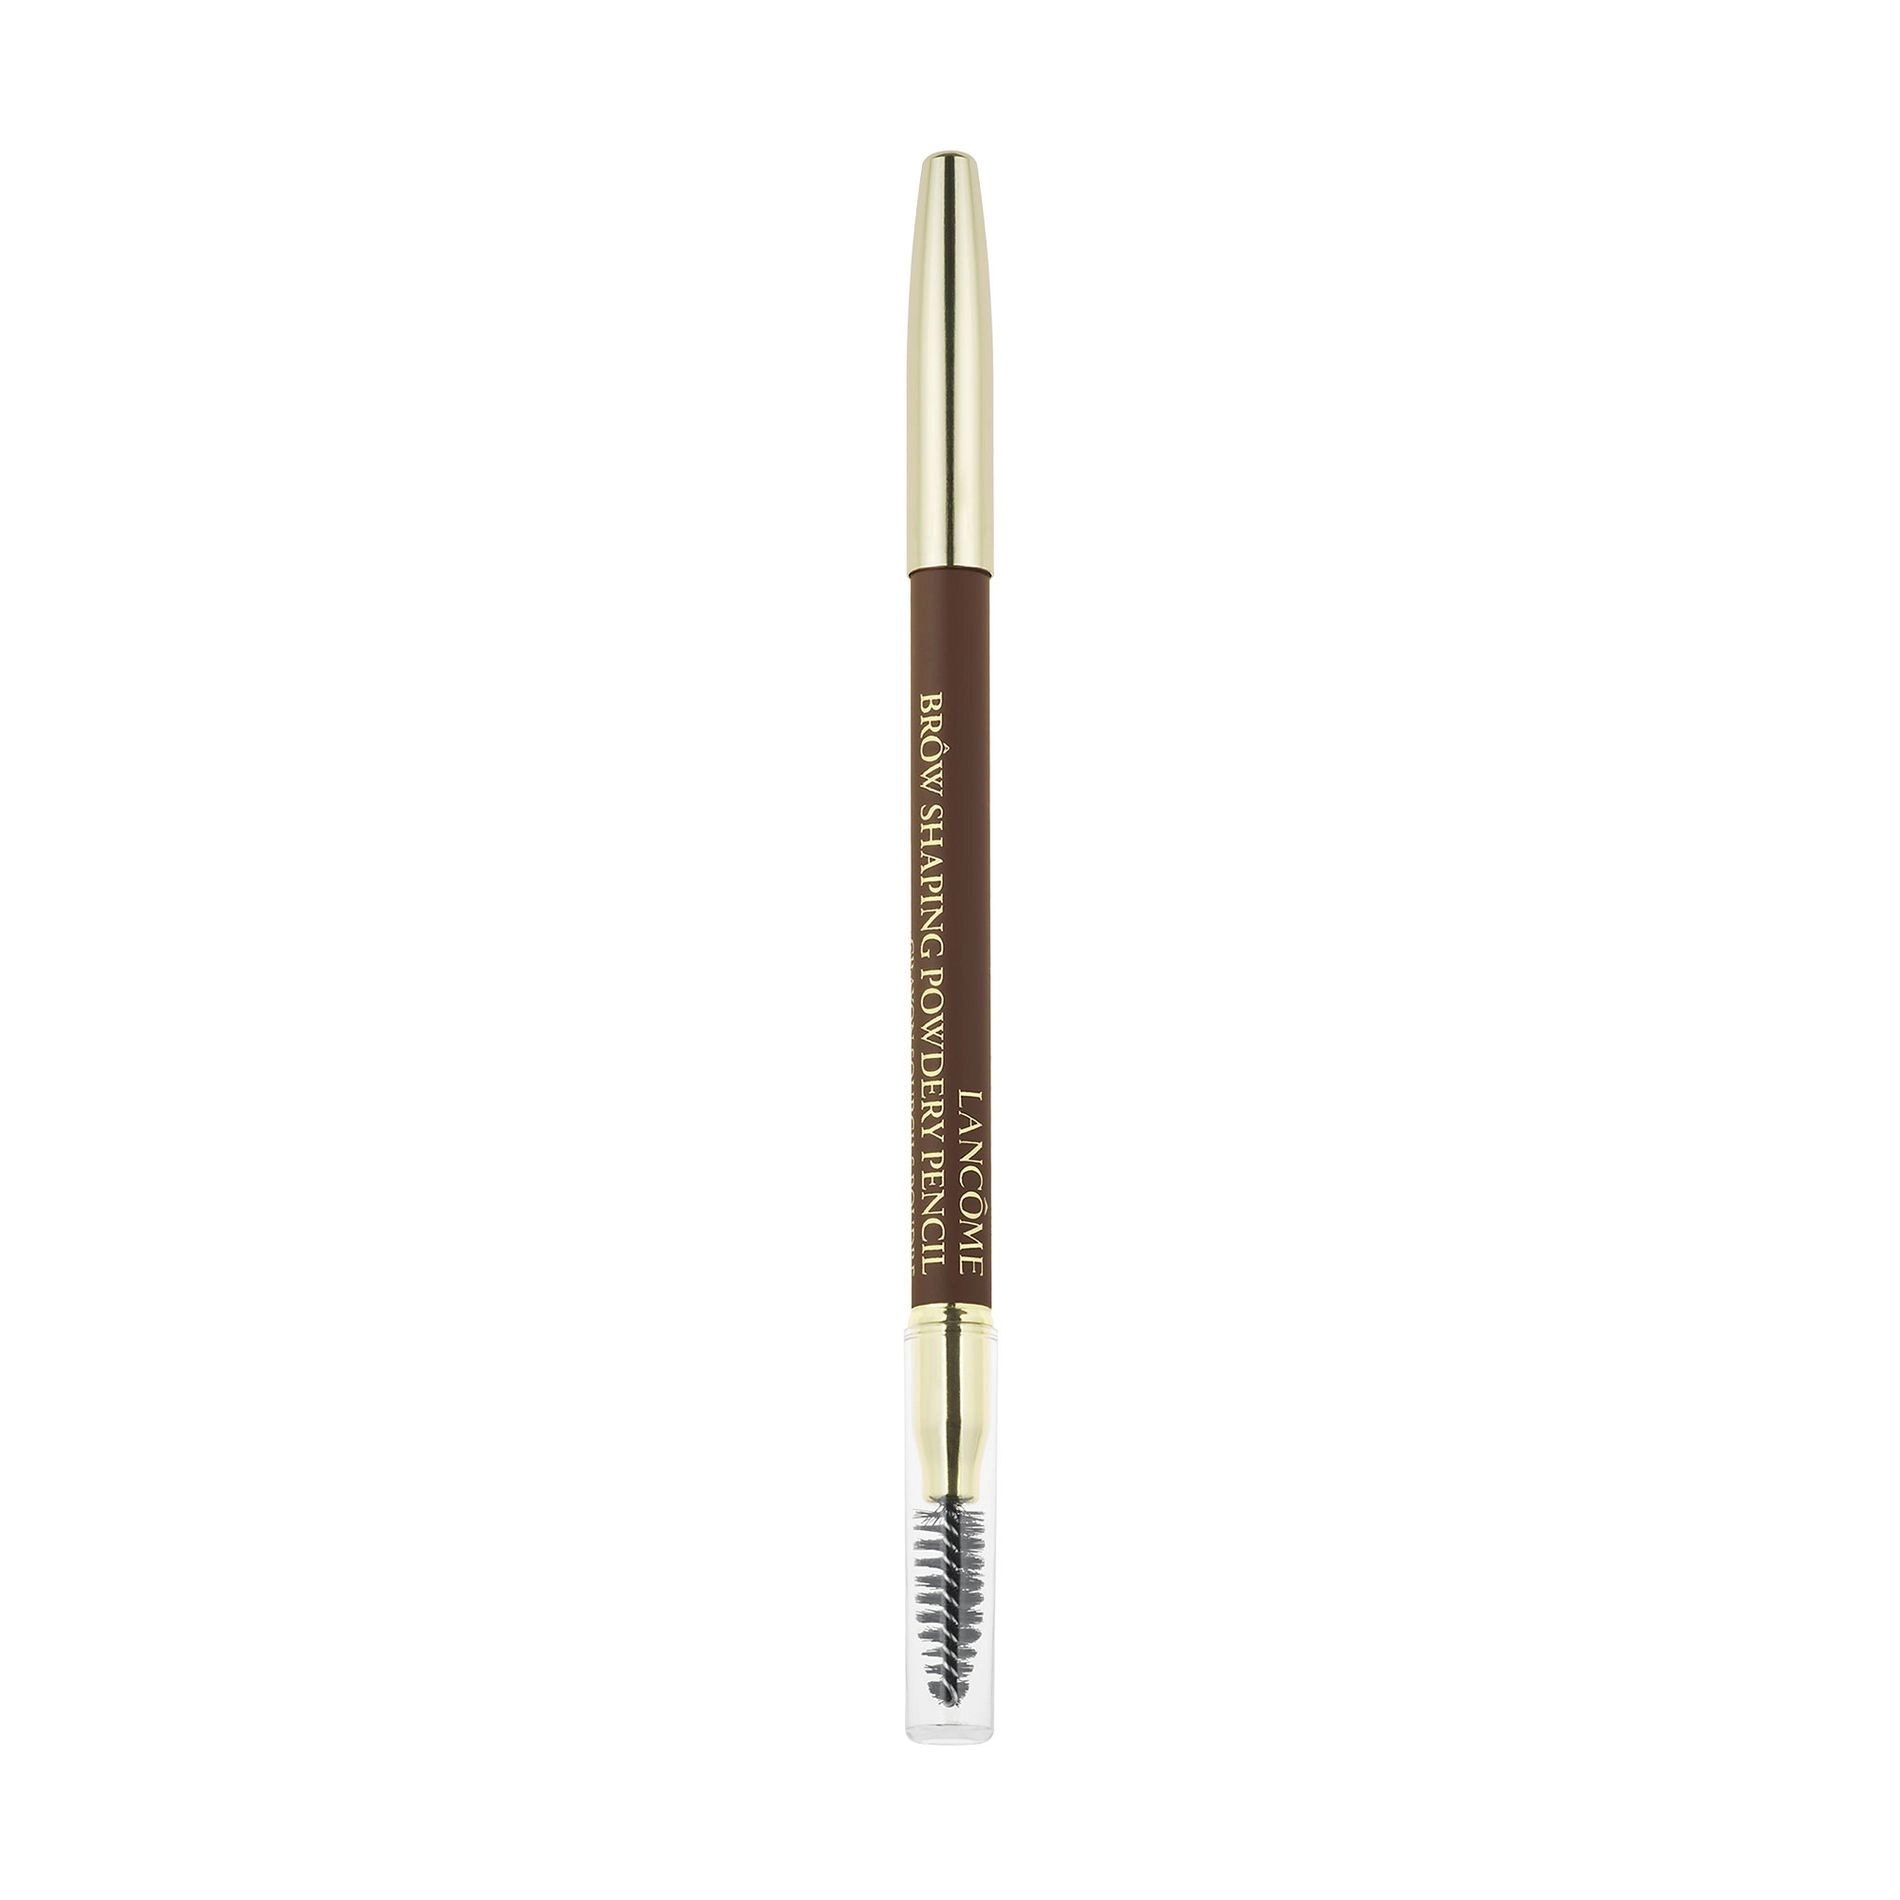 Lancome Олівець для брів Brow Shaping Powdery Pencil 05 Chestnut, 1.19 г - фото N1